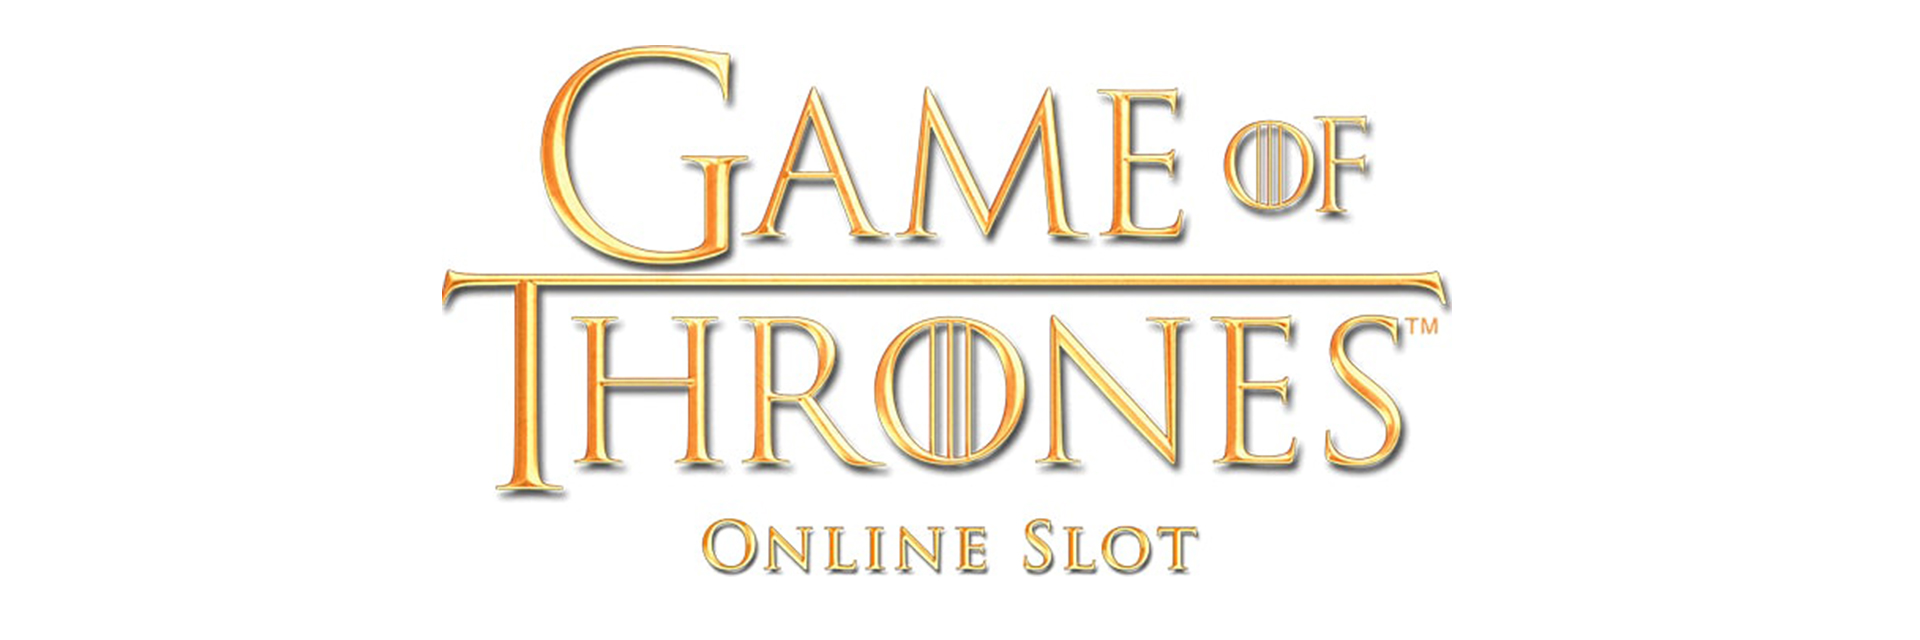 Game of Thrones slot machine logo.